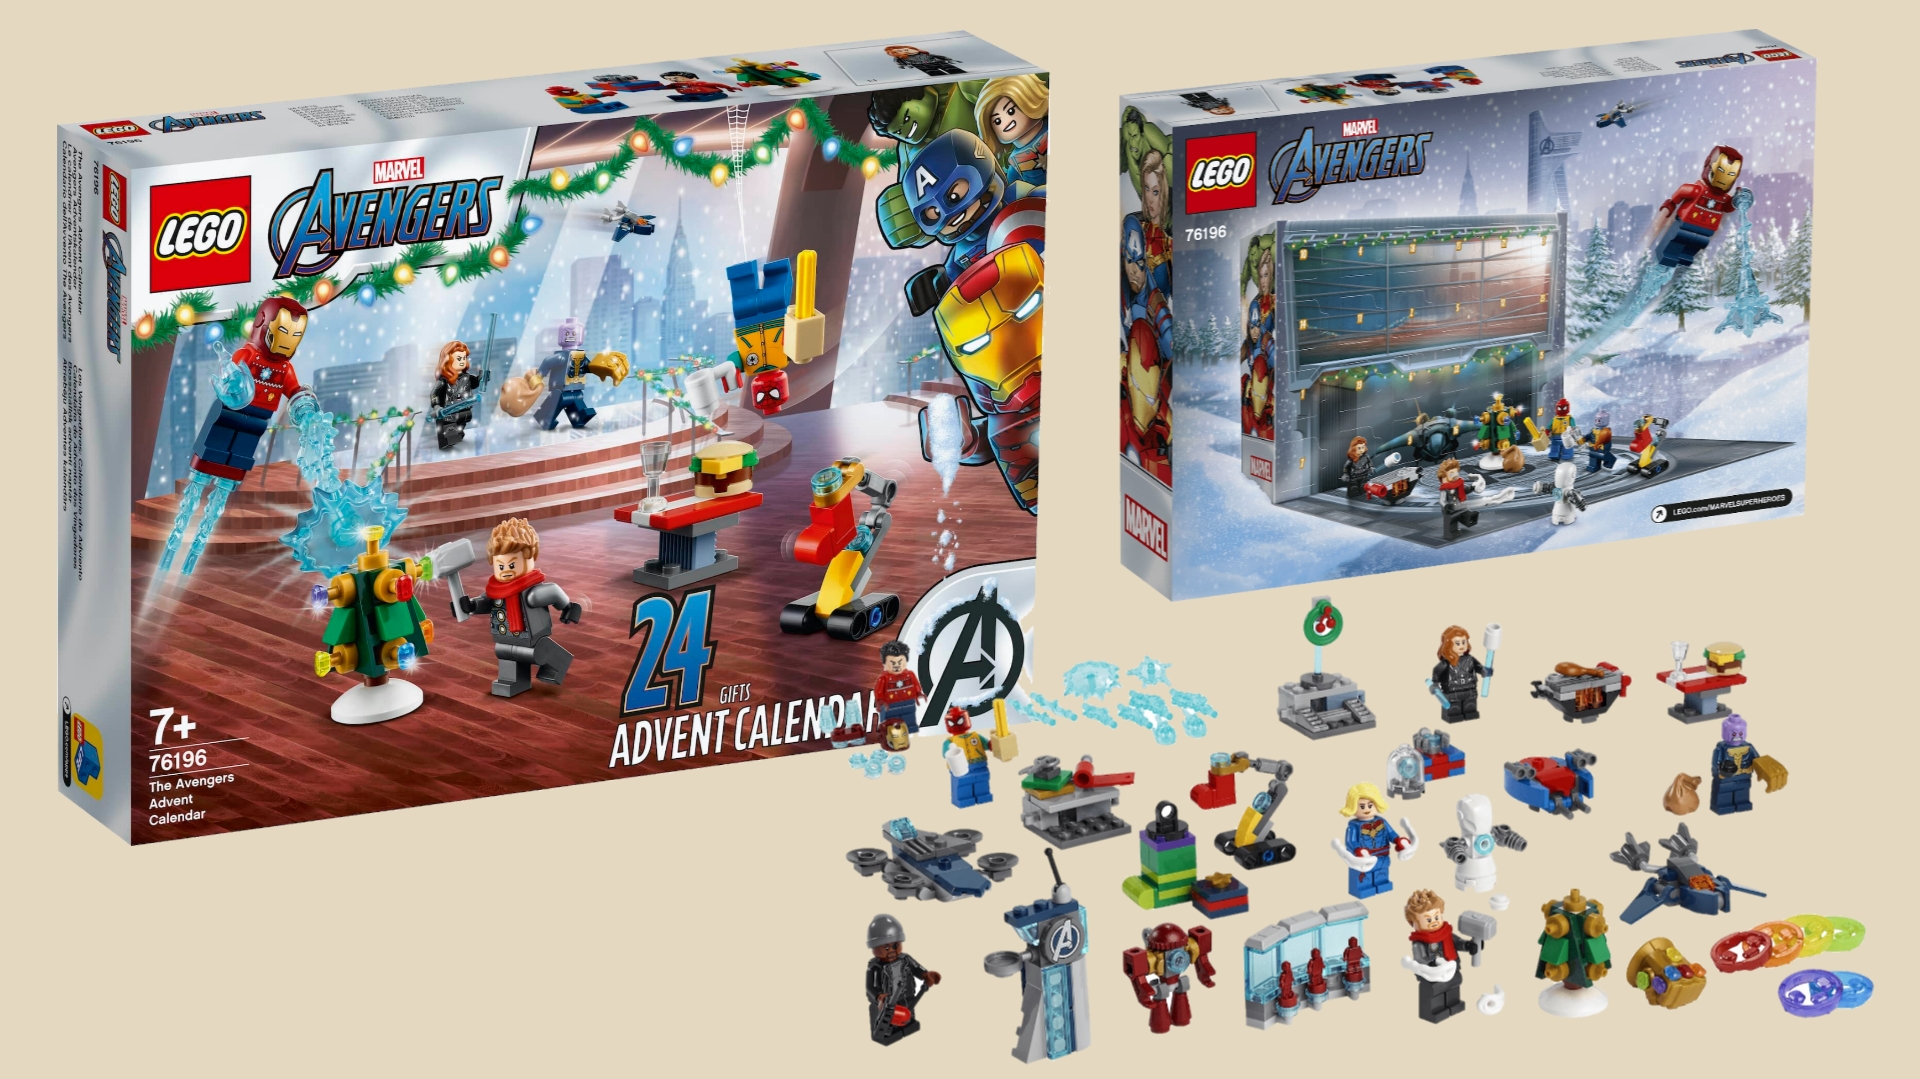 LEGO Marvel Avengers Advent Calendar 76196 Revealed! The Brick Post!